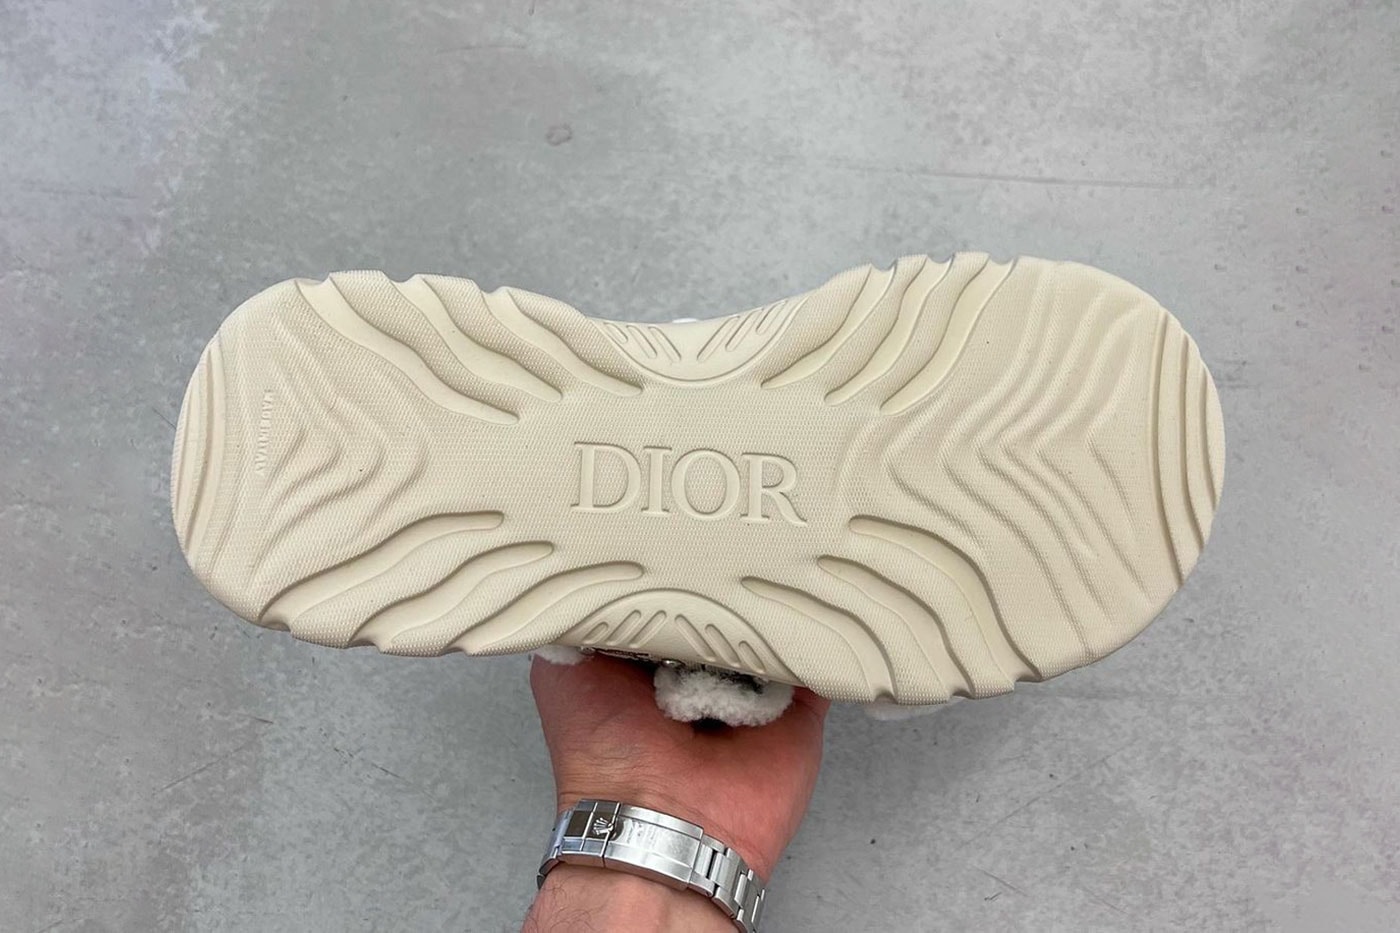 Dior Sherpa Jack oblique travis scott slippers sneaker sole metallic strap first look image date